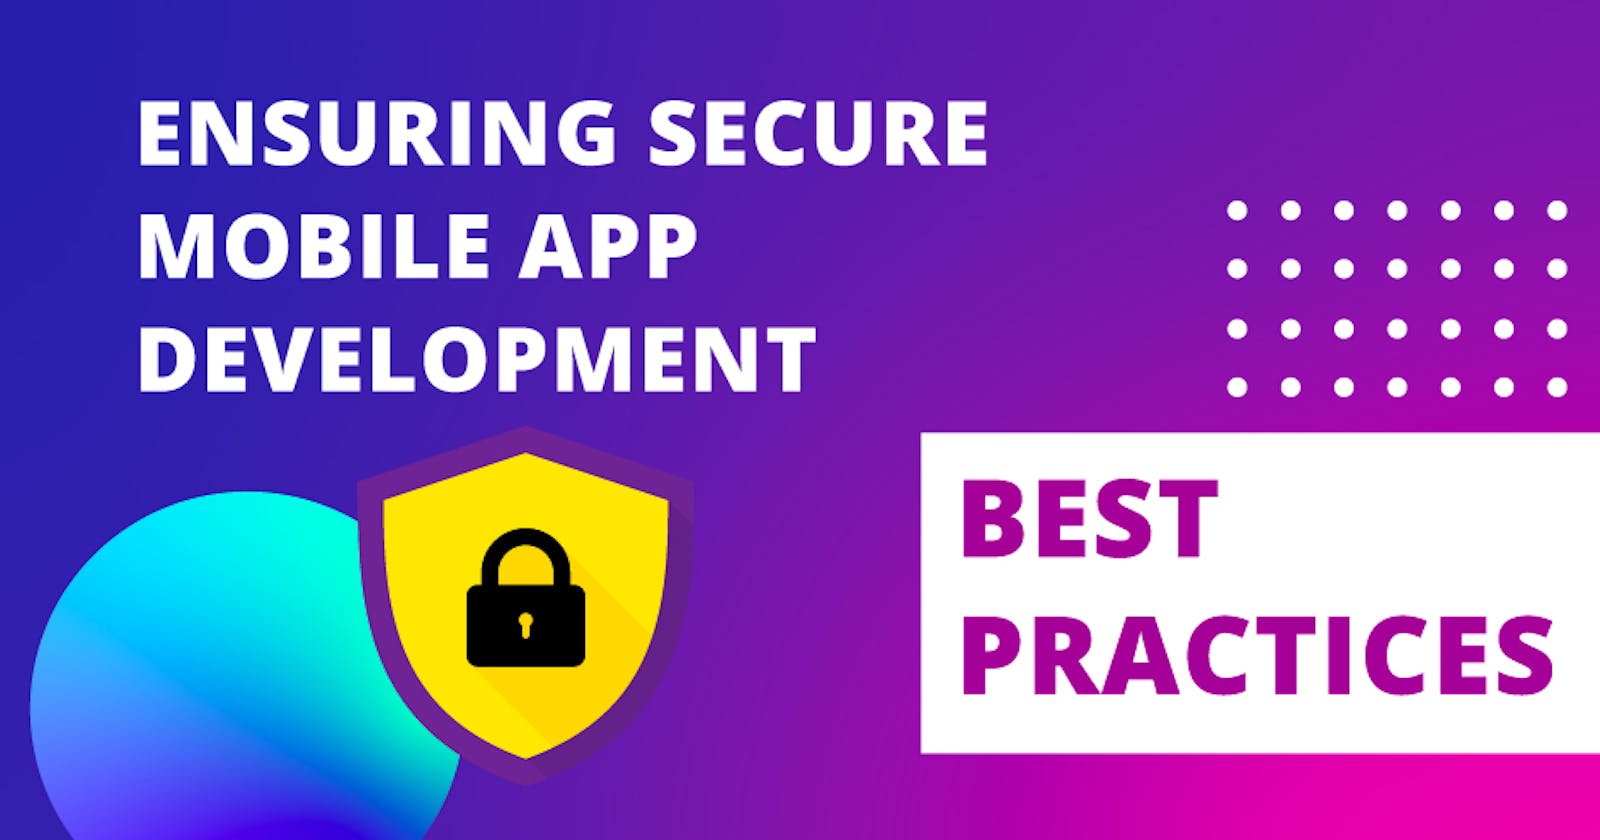 Ensuring secure mobile app development: Best practices